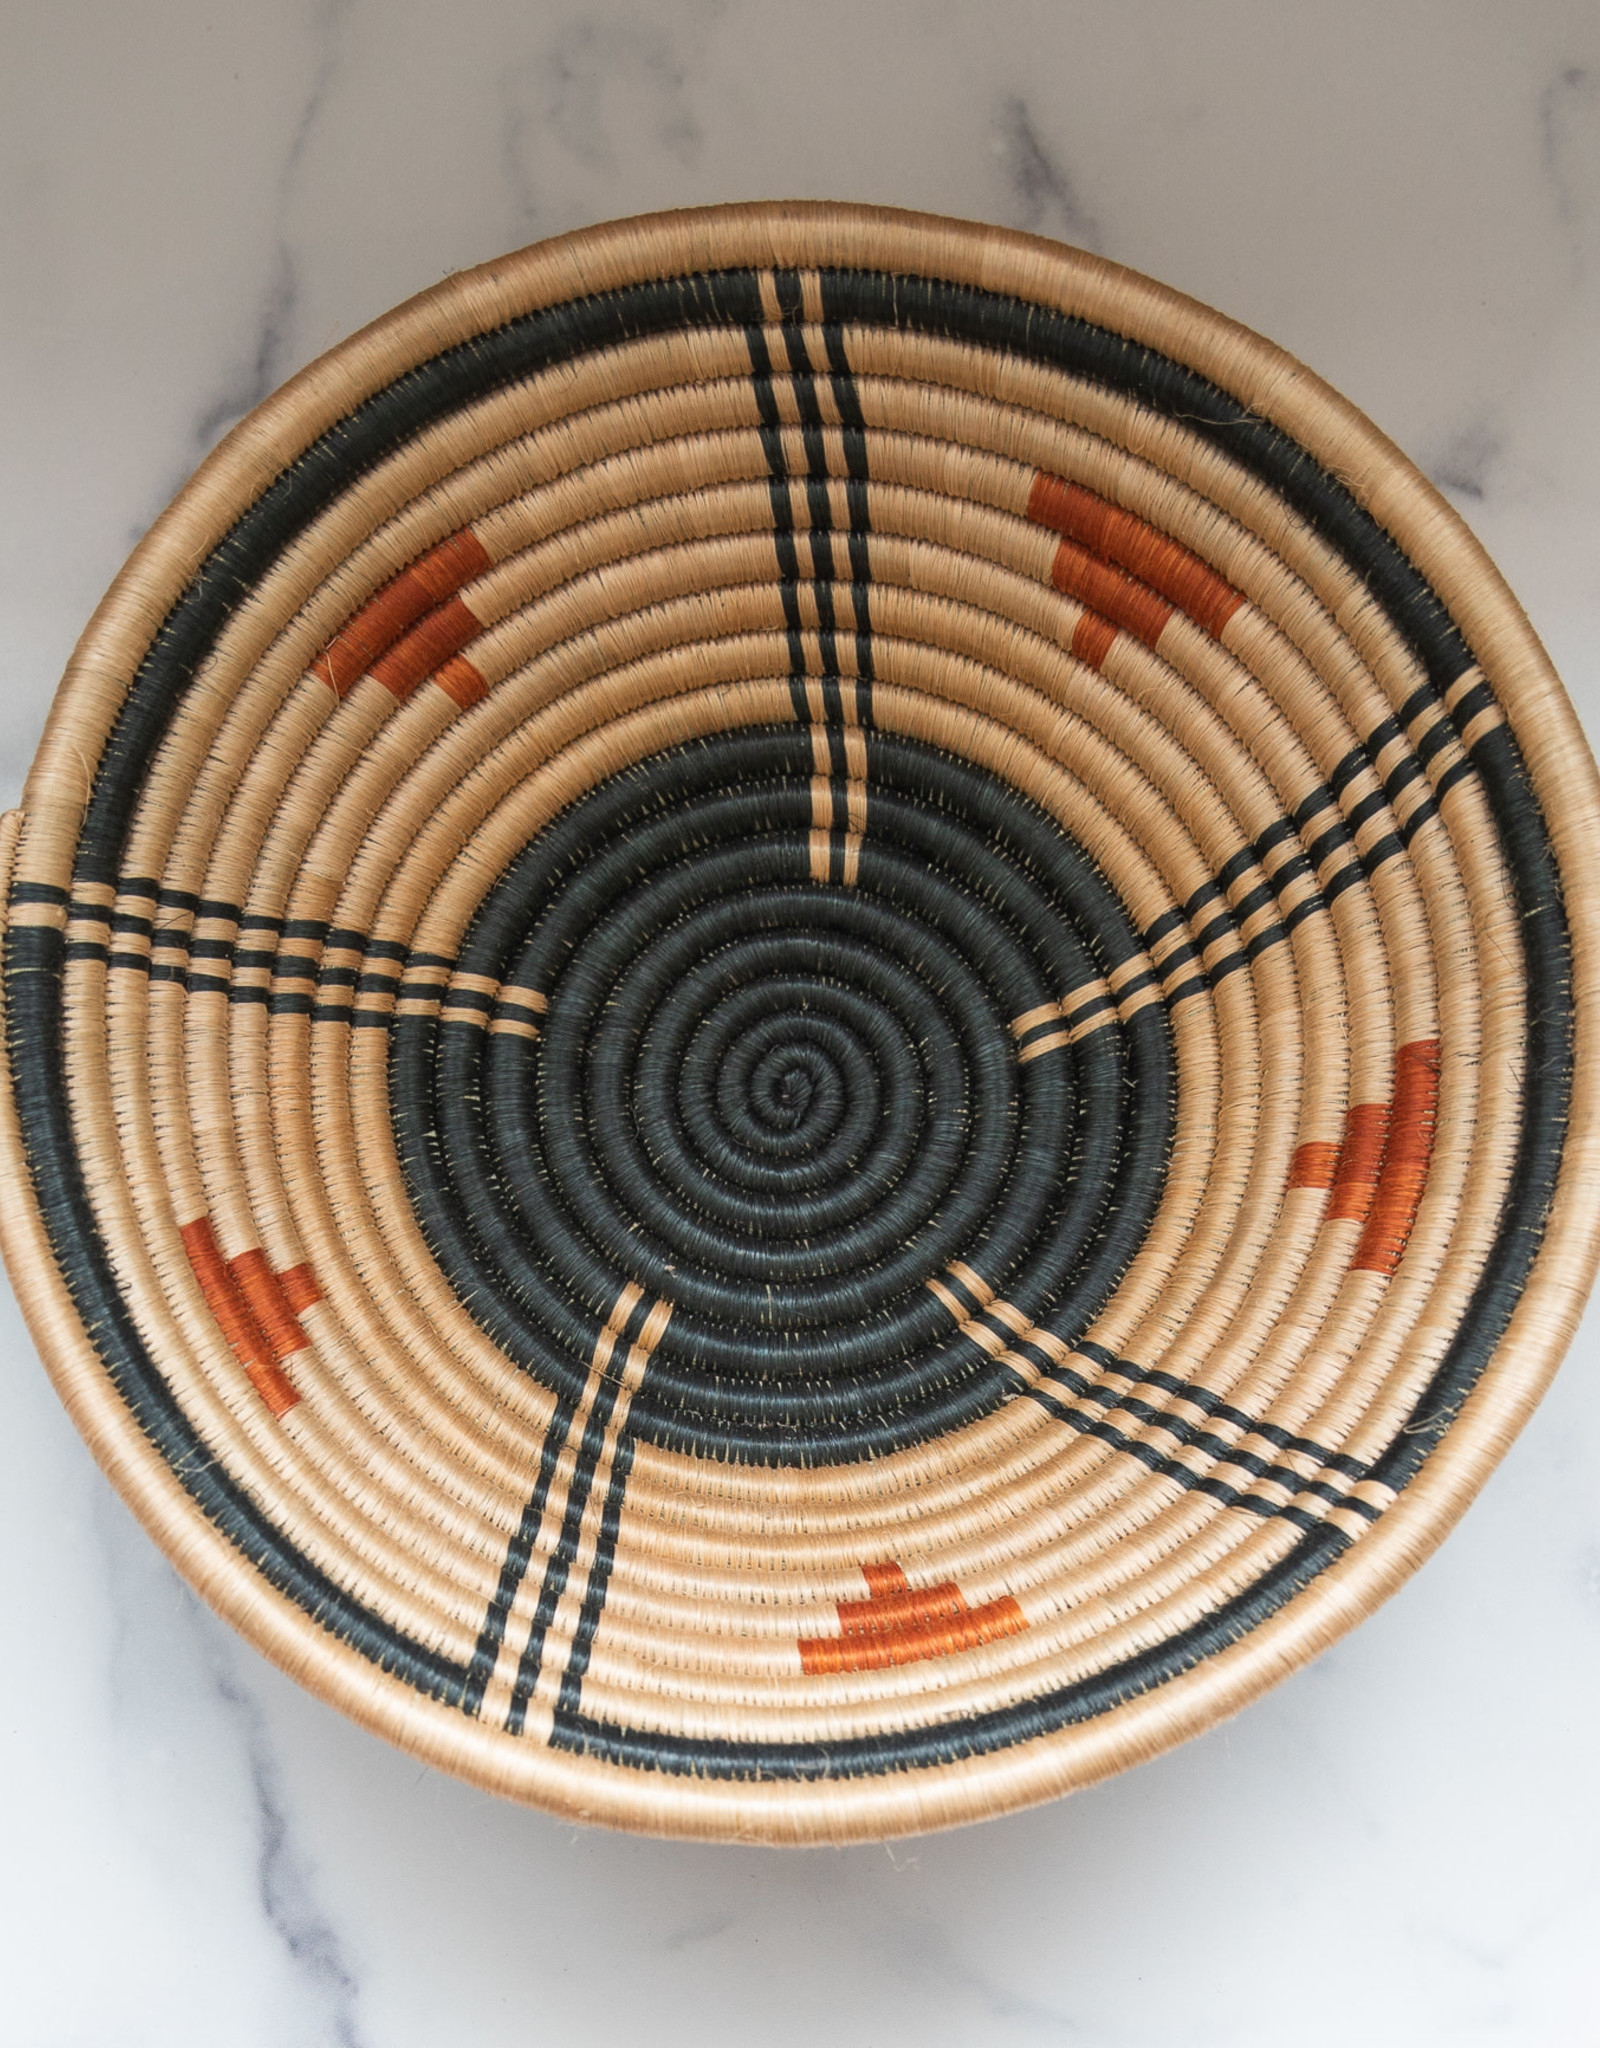 Handmade in Kenya - 12 Inch Bowl #2